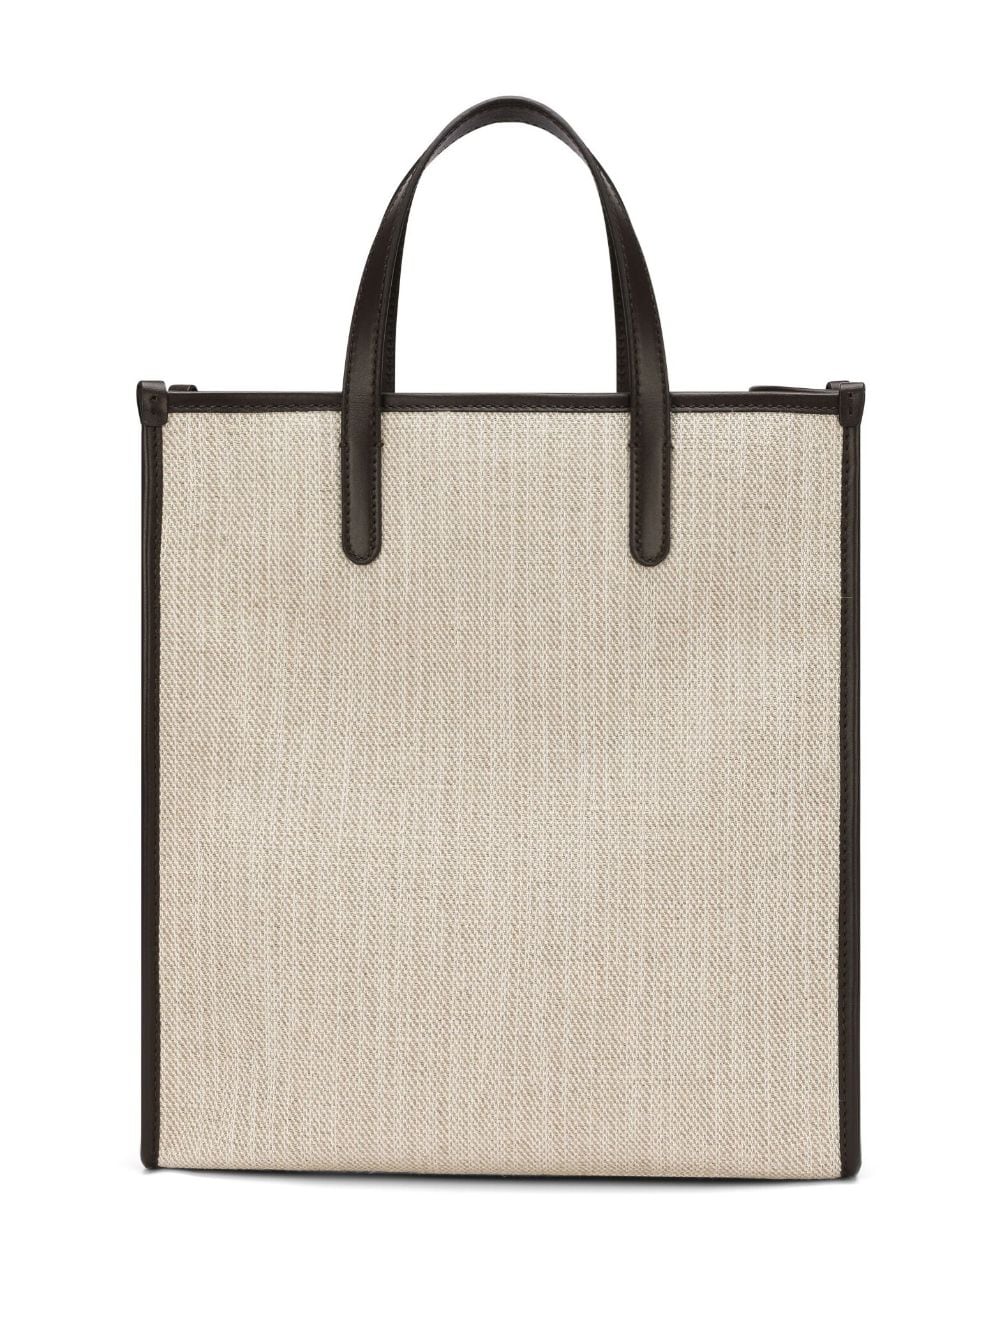 DOLCE & GABBANA Men's Tan Cotton Tote Handbag for Fall/Winter 2023